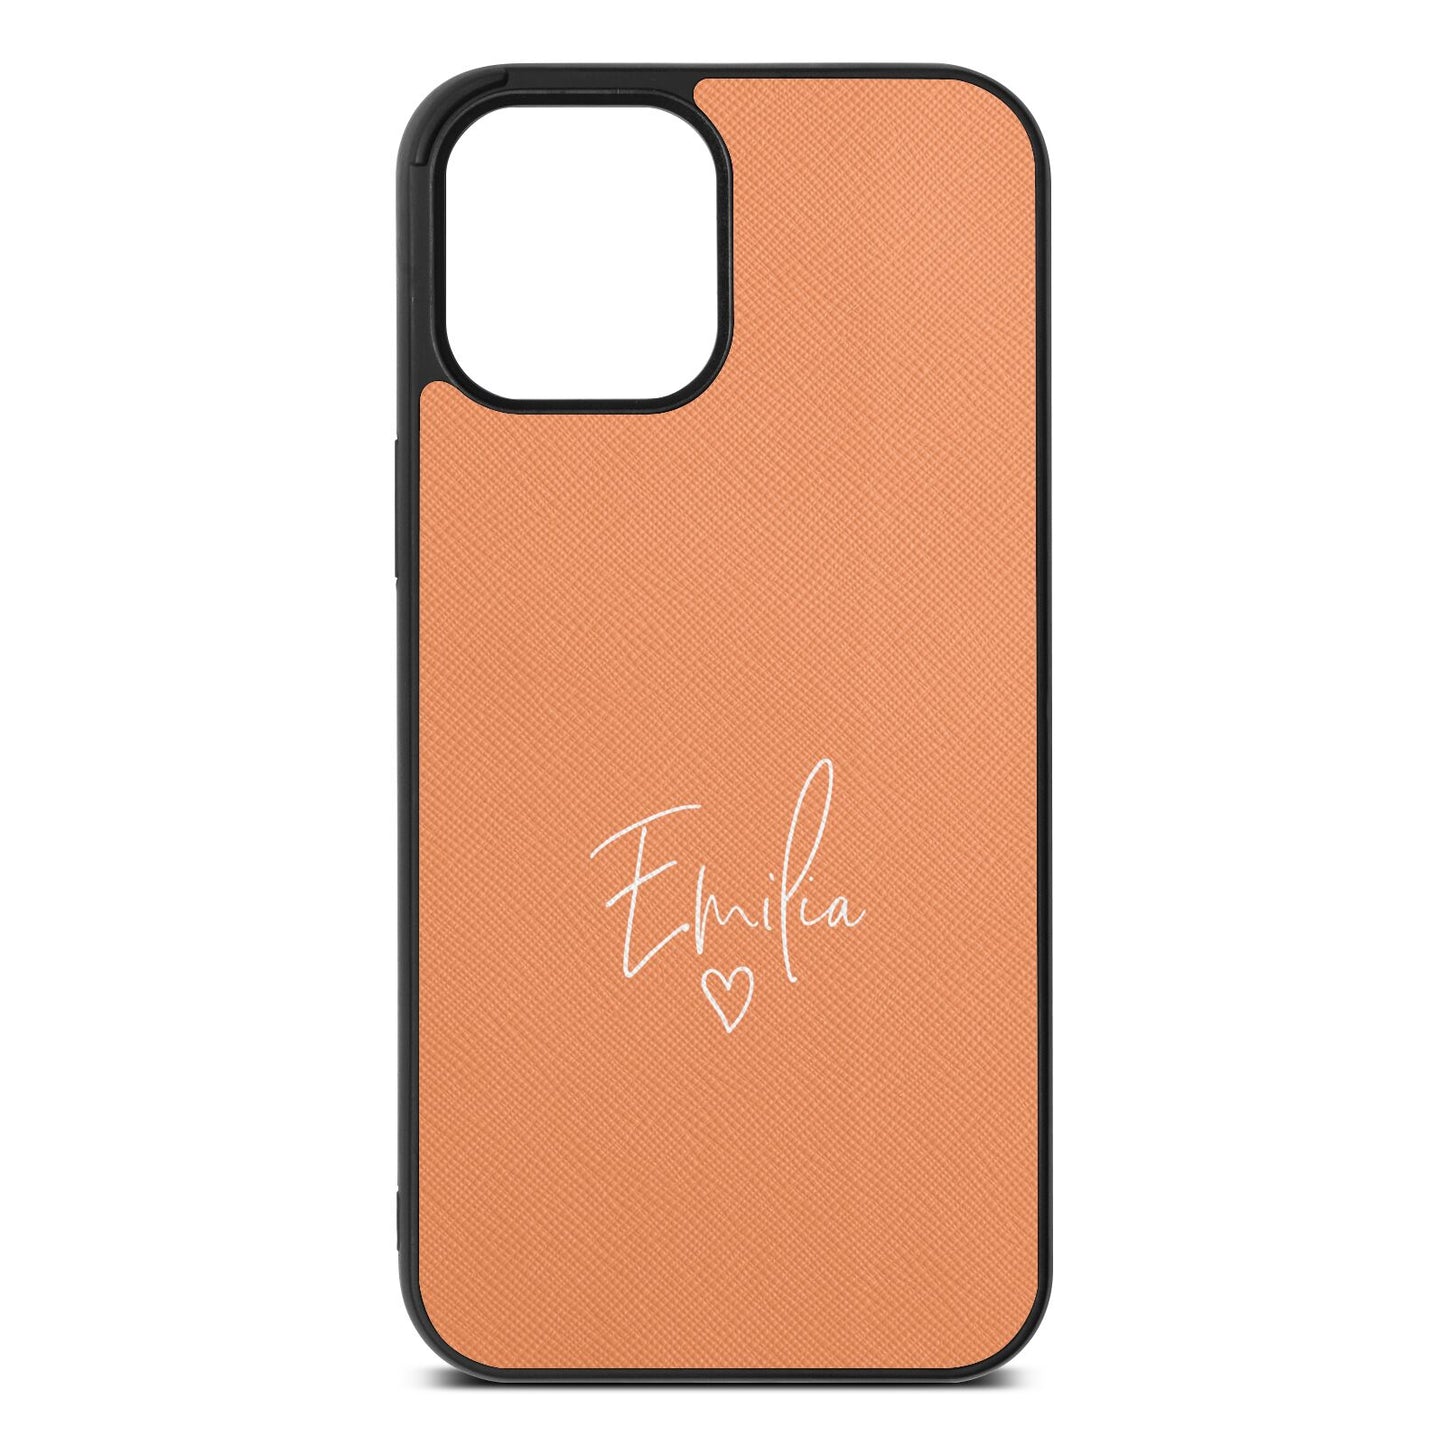 White Handwritten Name Transparent Orange Saffiano Leather iPhone 12 Pro Max Case